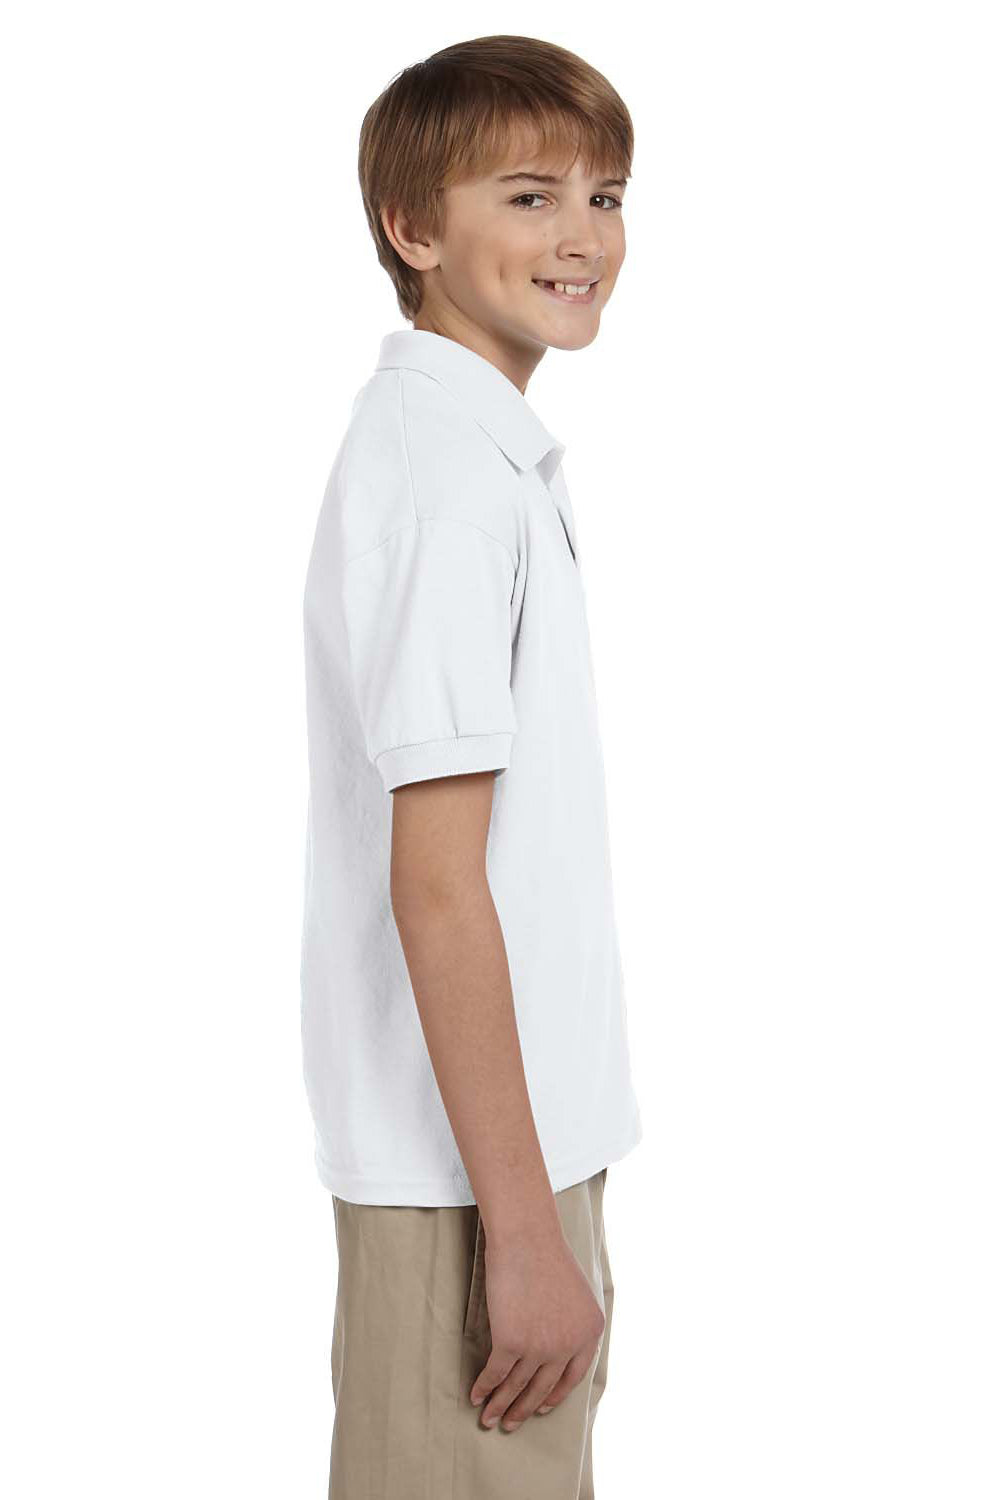 Gildan G880B Youth DryBlend Moisture Wicking Short Sleeve Polo Shirt White Side